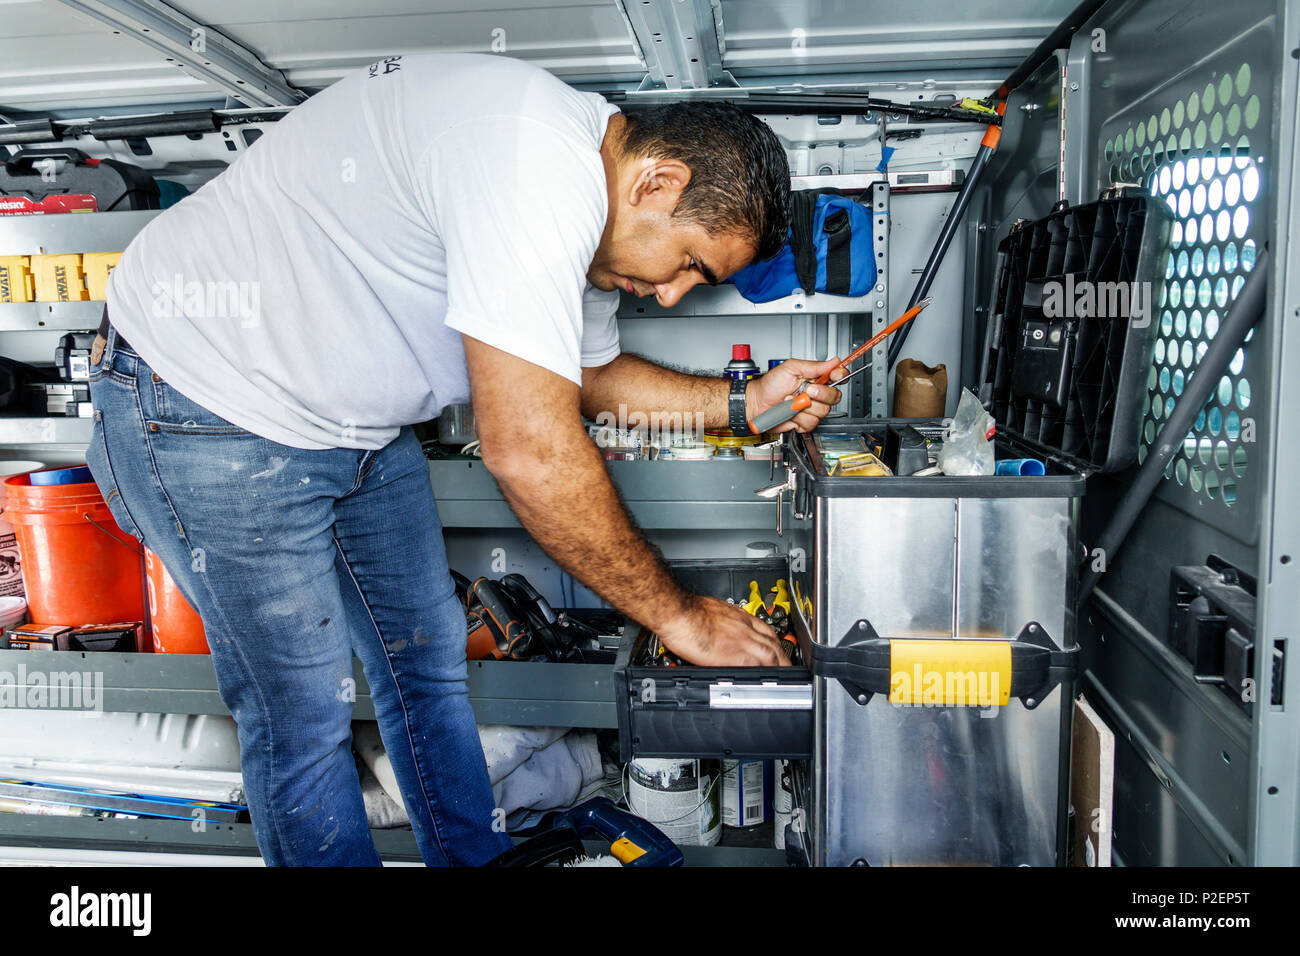 Miami Beach Florida,Hispanic,immigrant immigrants,man men male,contractor,repairman,inside van,tools,searching,working,tool chest,FL170911005 Stock Photo